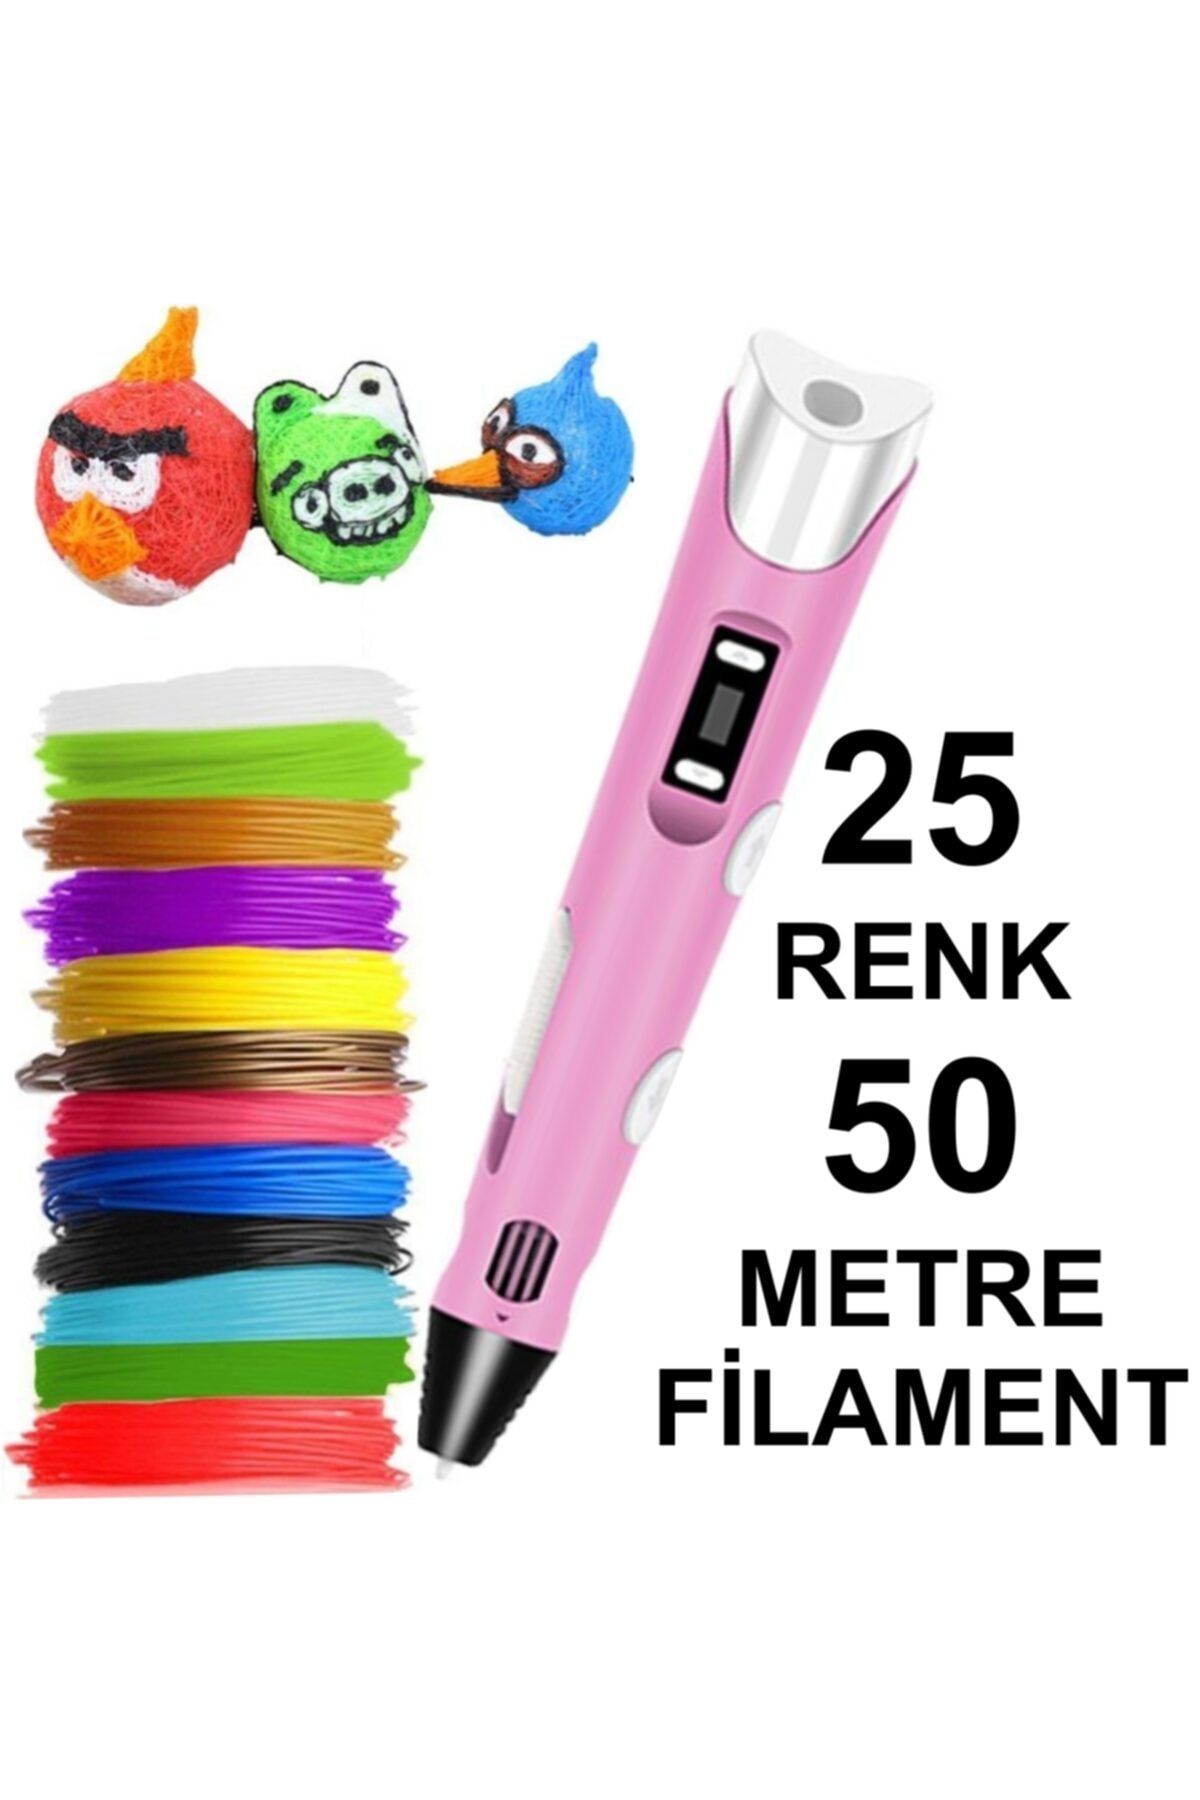 3D Pembe Kalem Yazıcı+25 Renk 50 Metre (25x2metre) Pla Filament